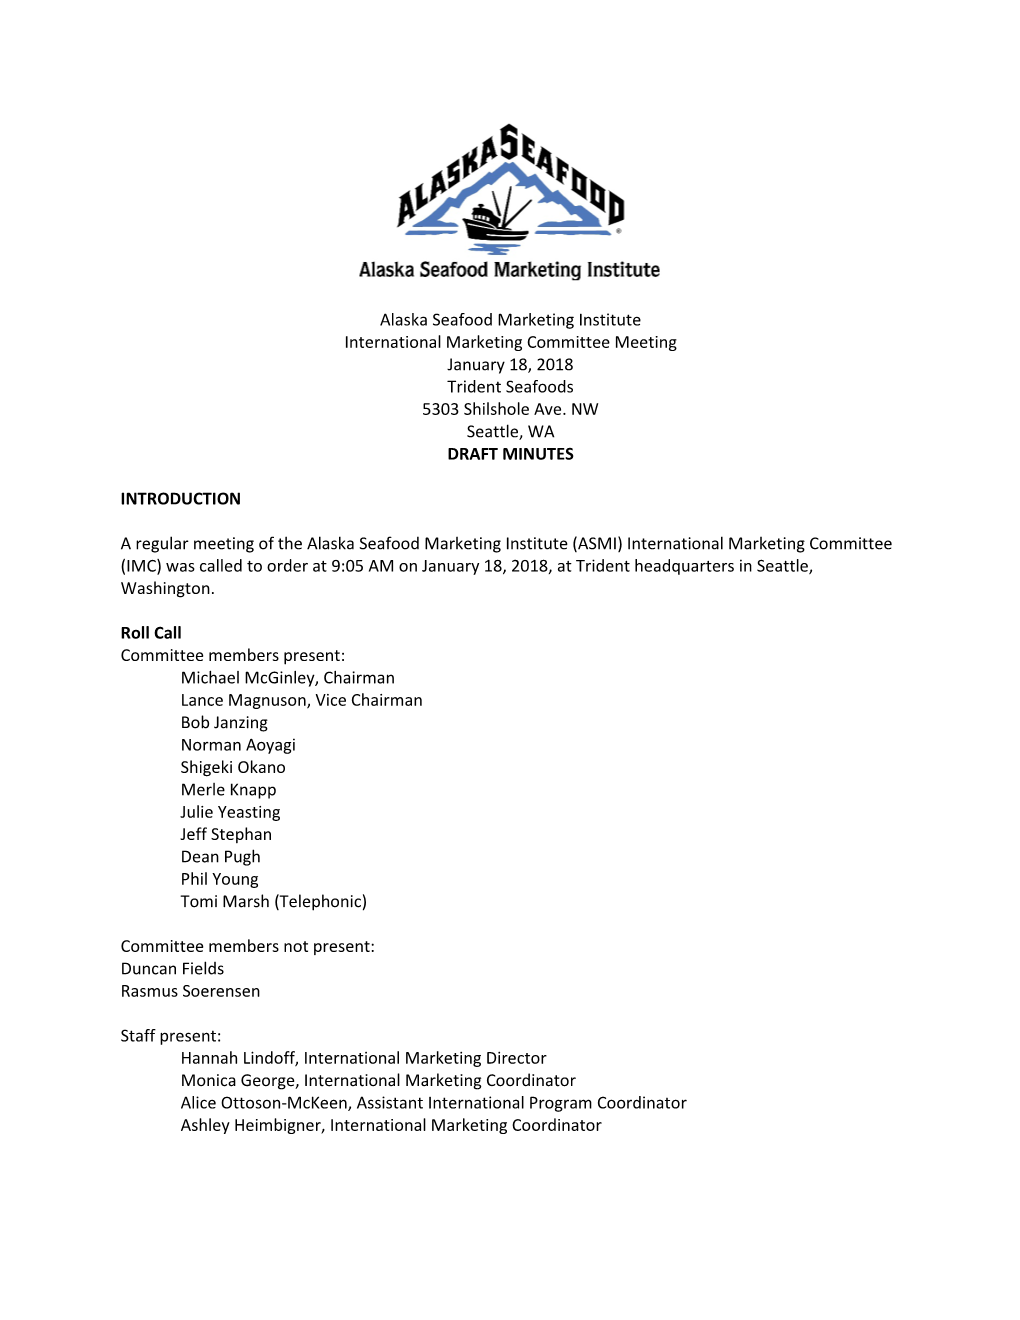 Alaska Seafood Marketing Institute International Marketing Committee Meeting January 18, 2018 Trident Seafoods 5303 Shilshole Ave